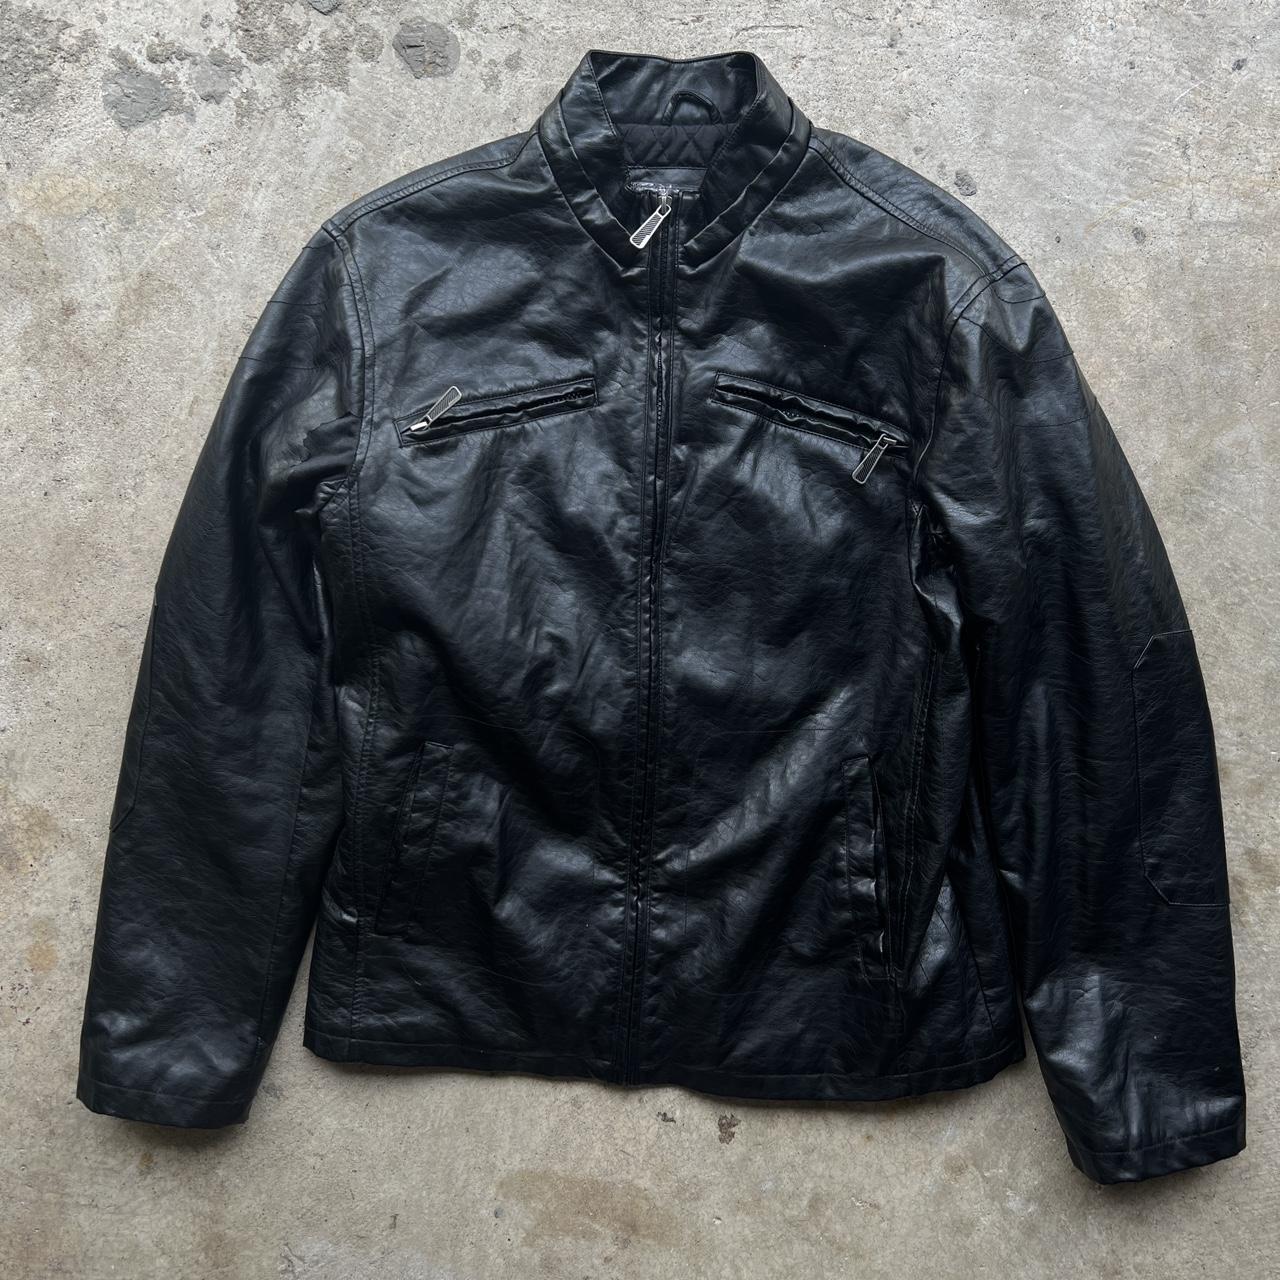 1990s Biker Leather Jacket measurements: 22in x... - Depop